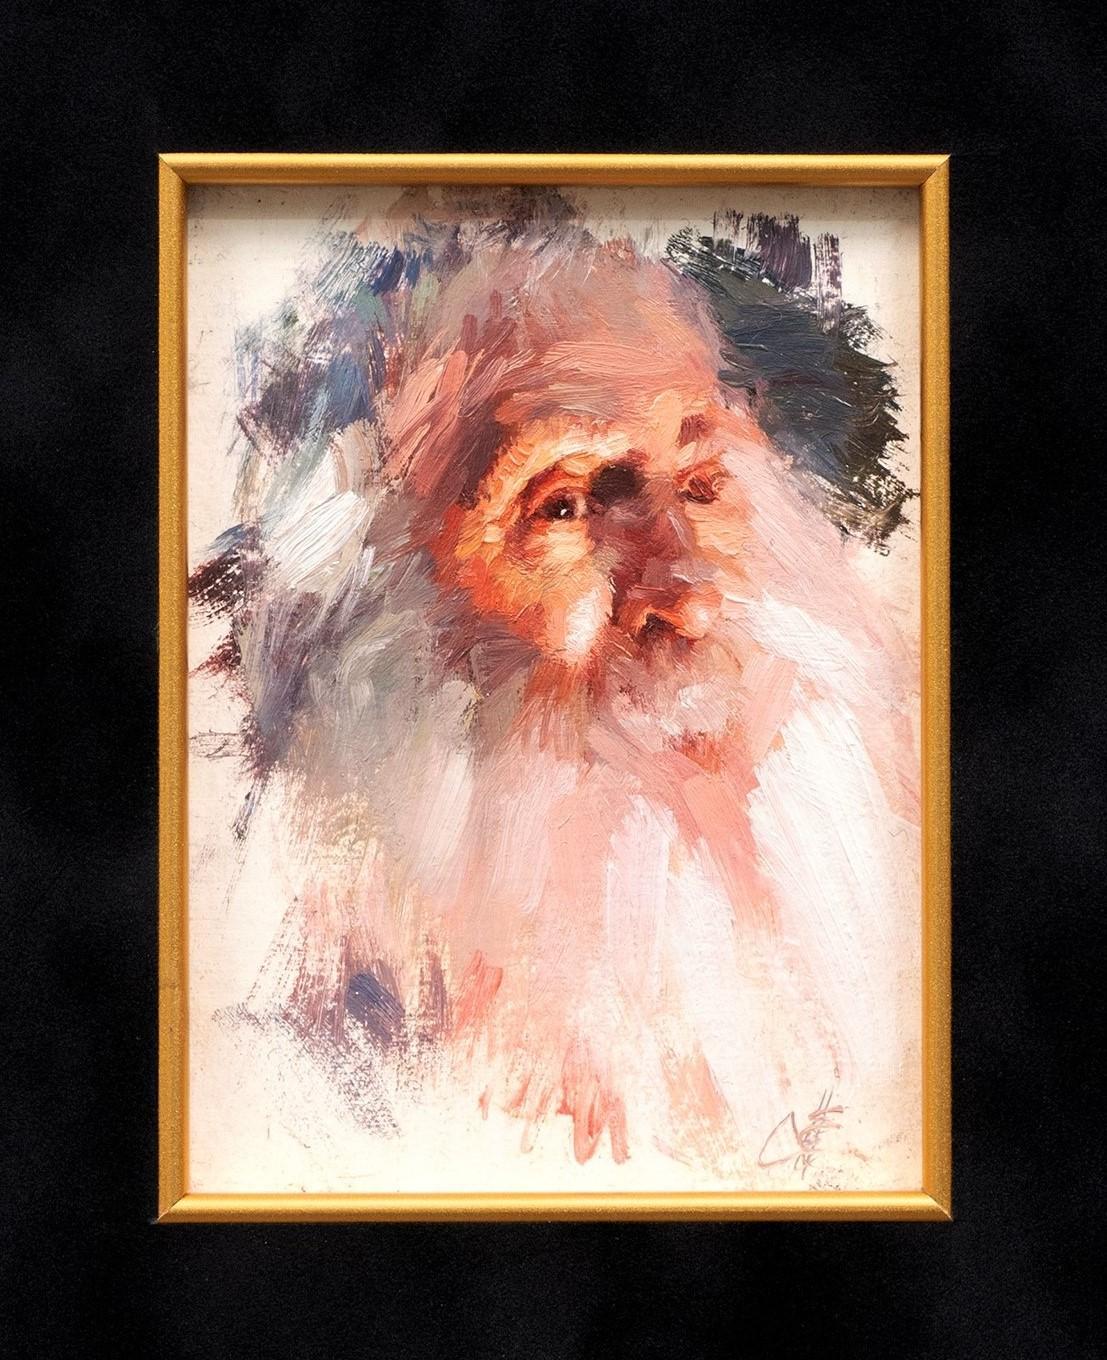 "Portrait of The Sage" by Emin Abbasov (b. 1950, Azerbaijan), oil on cardboard